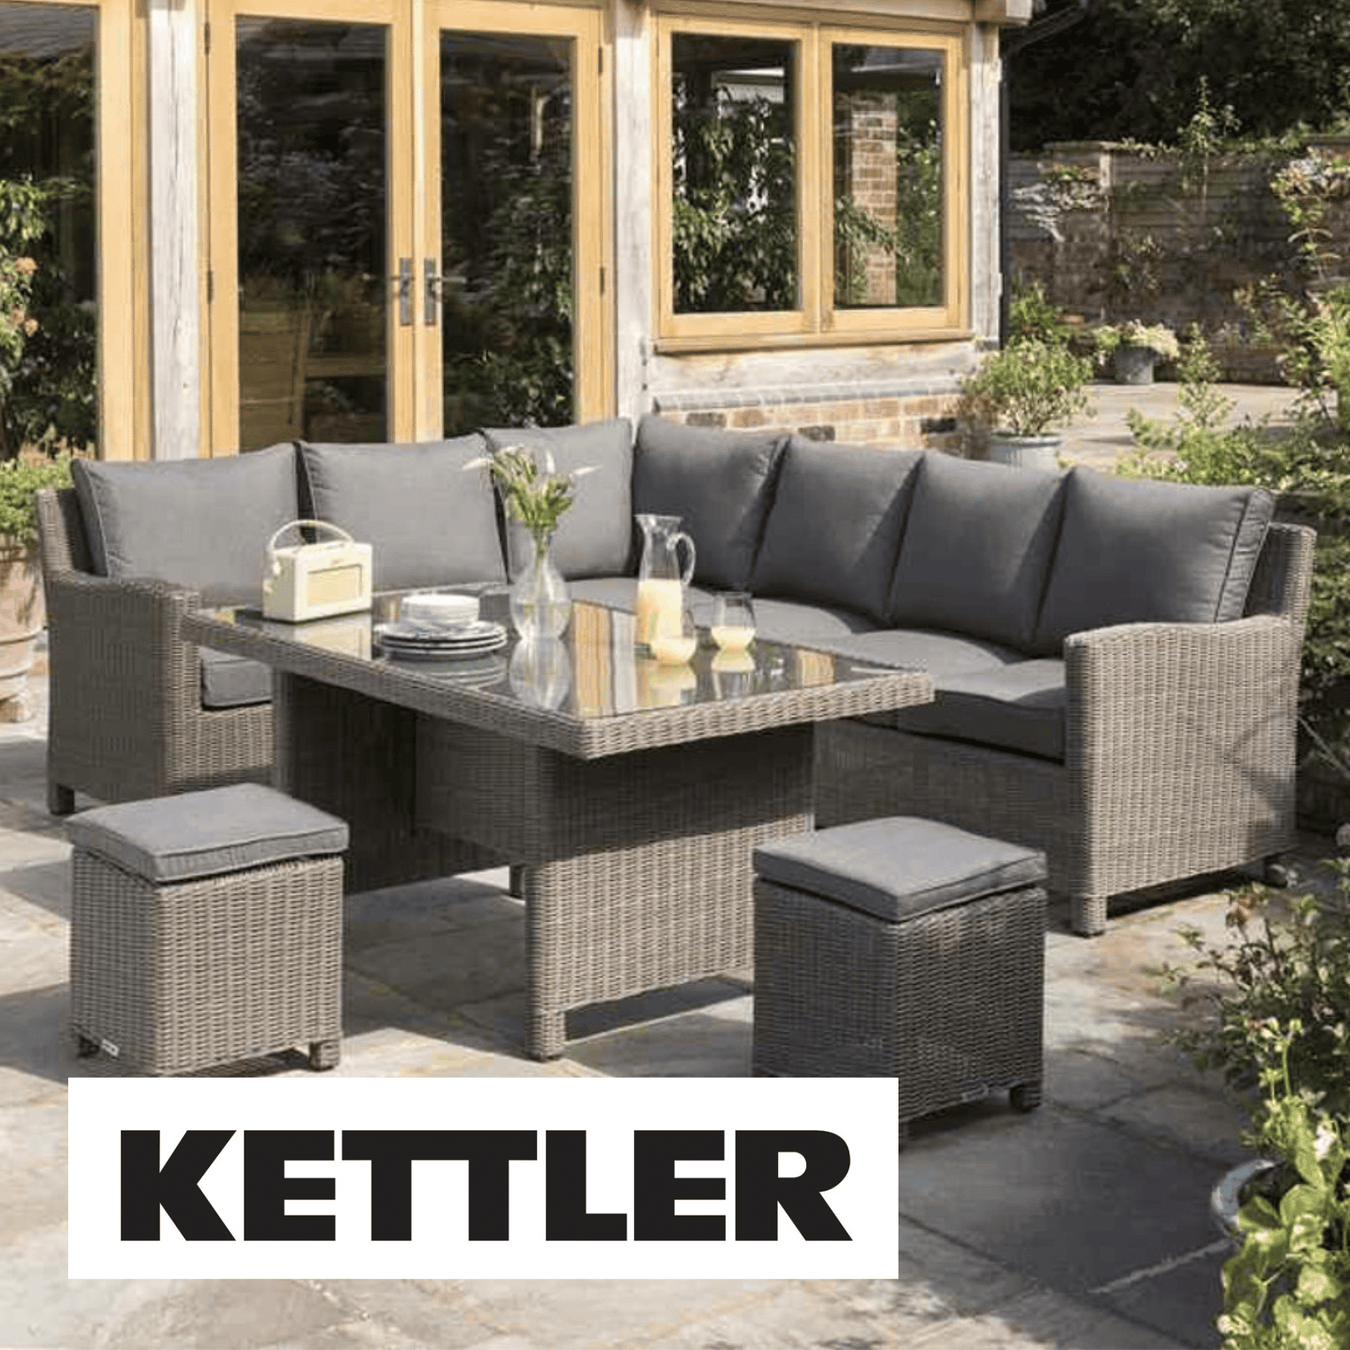 Kettler Garden Furniture